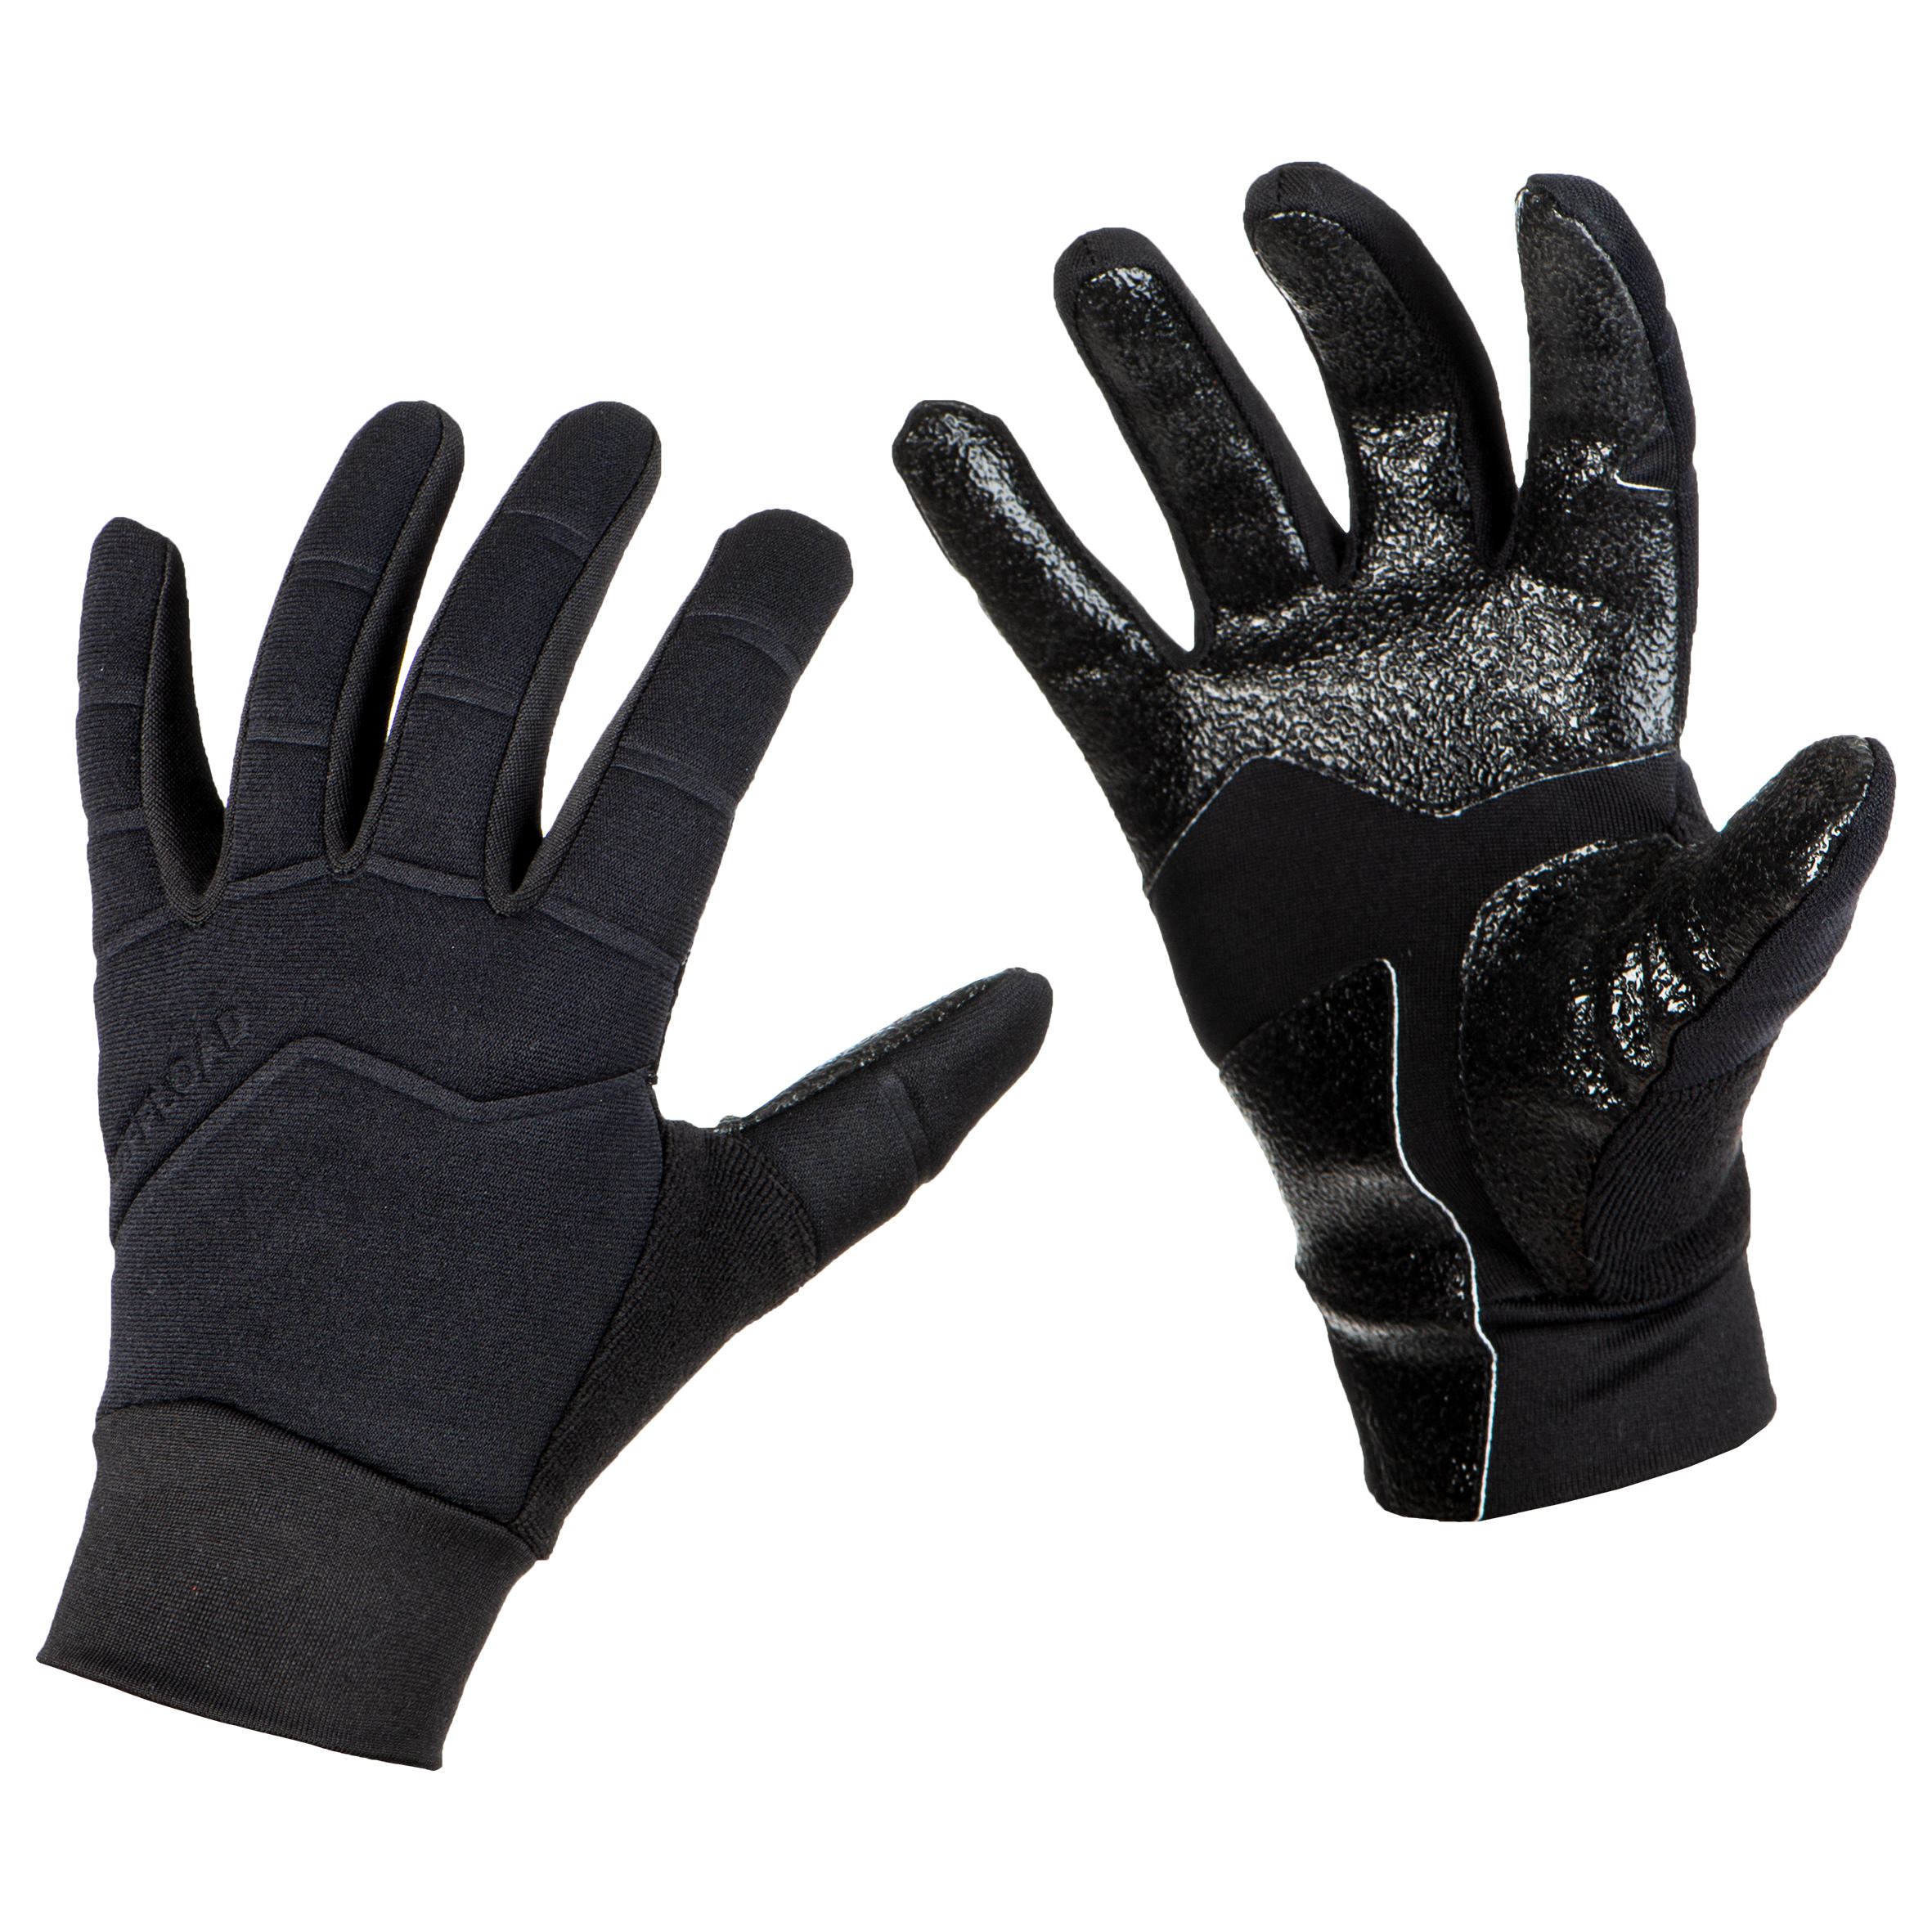 R500 Adult Winter Rugby Gloves - Black 5/8